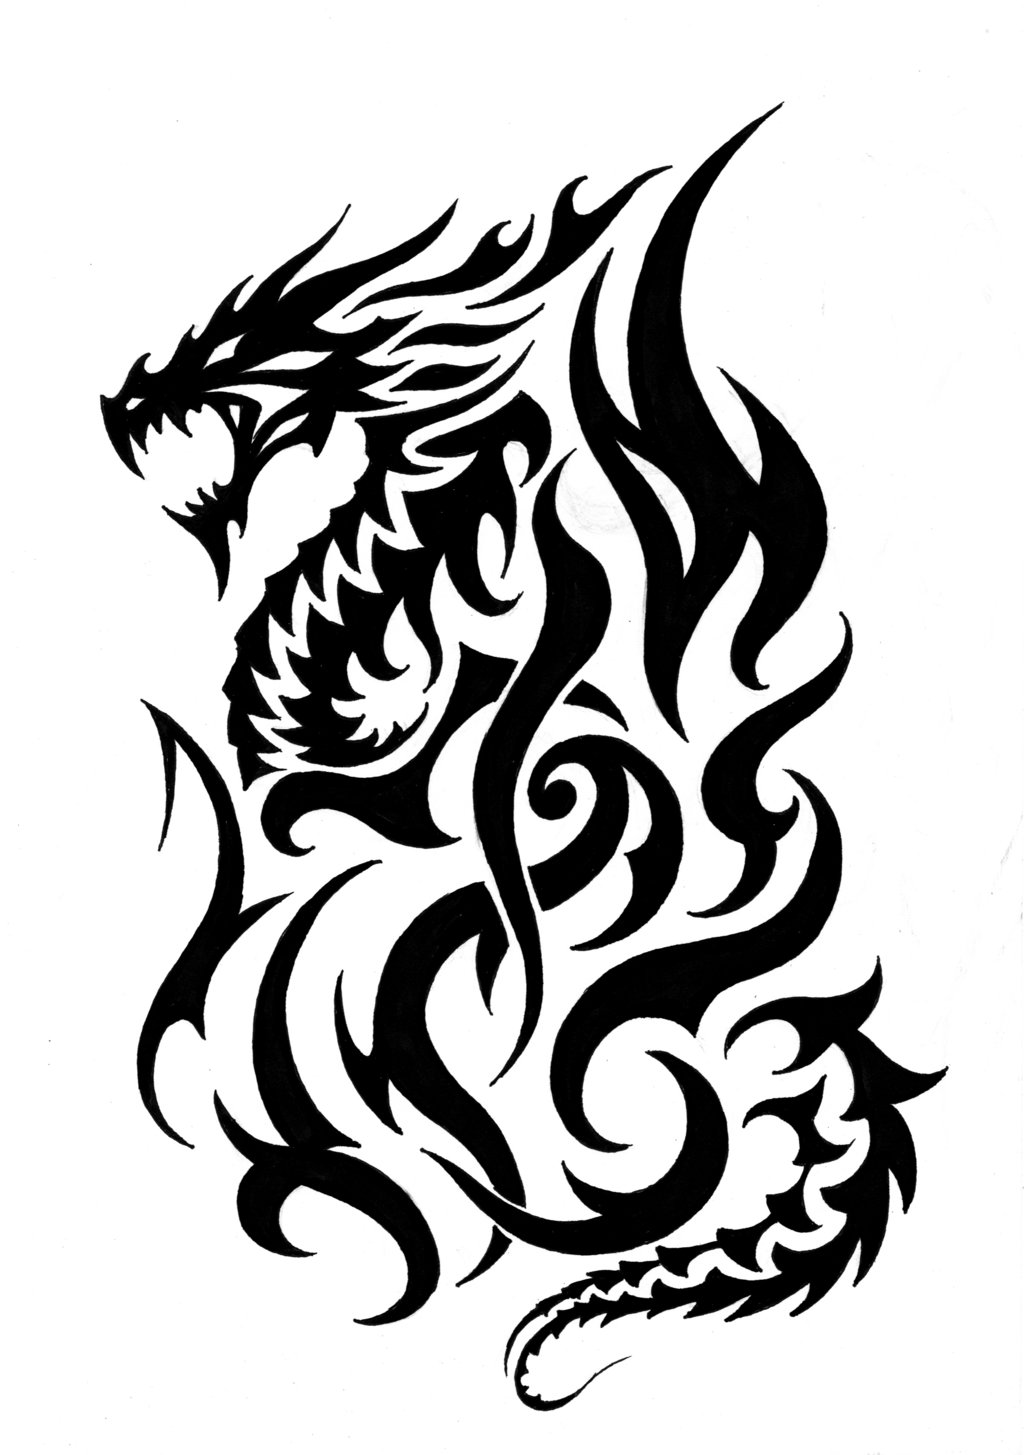 fire breathing dragon silhouette